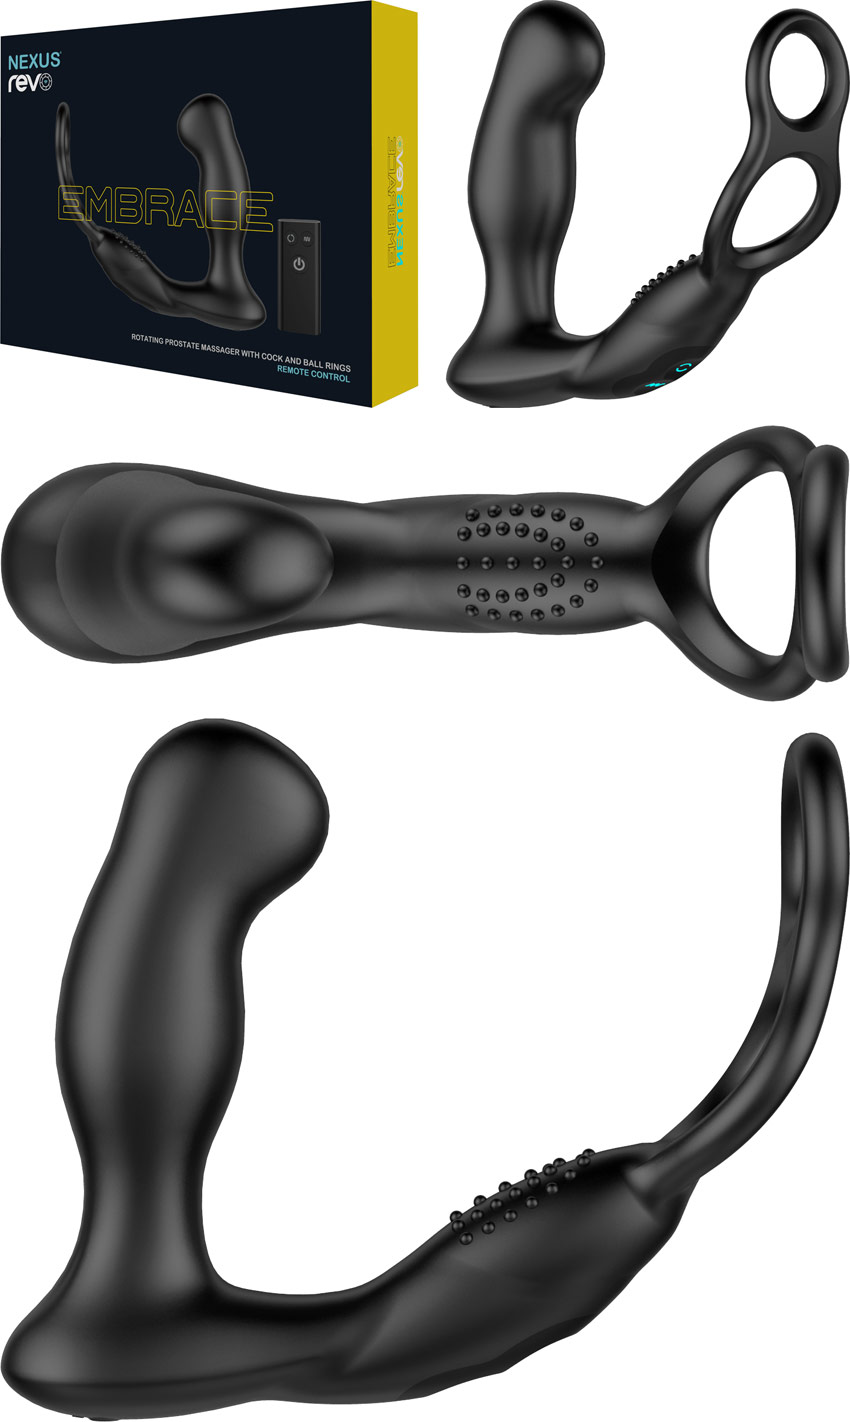 Nexus Revo Embrace prostate stimulator and penis ring